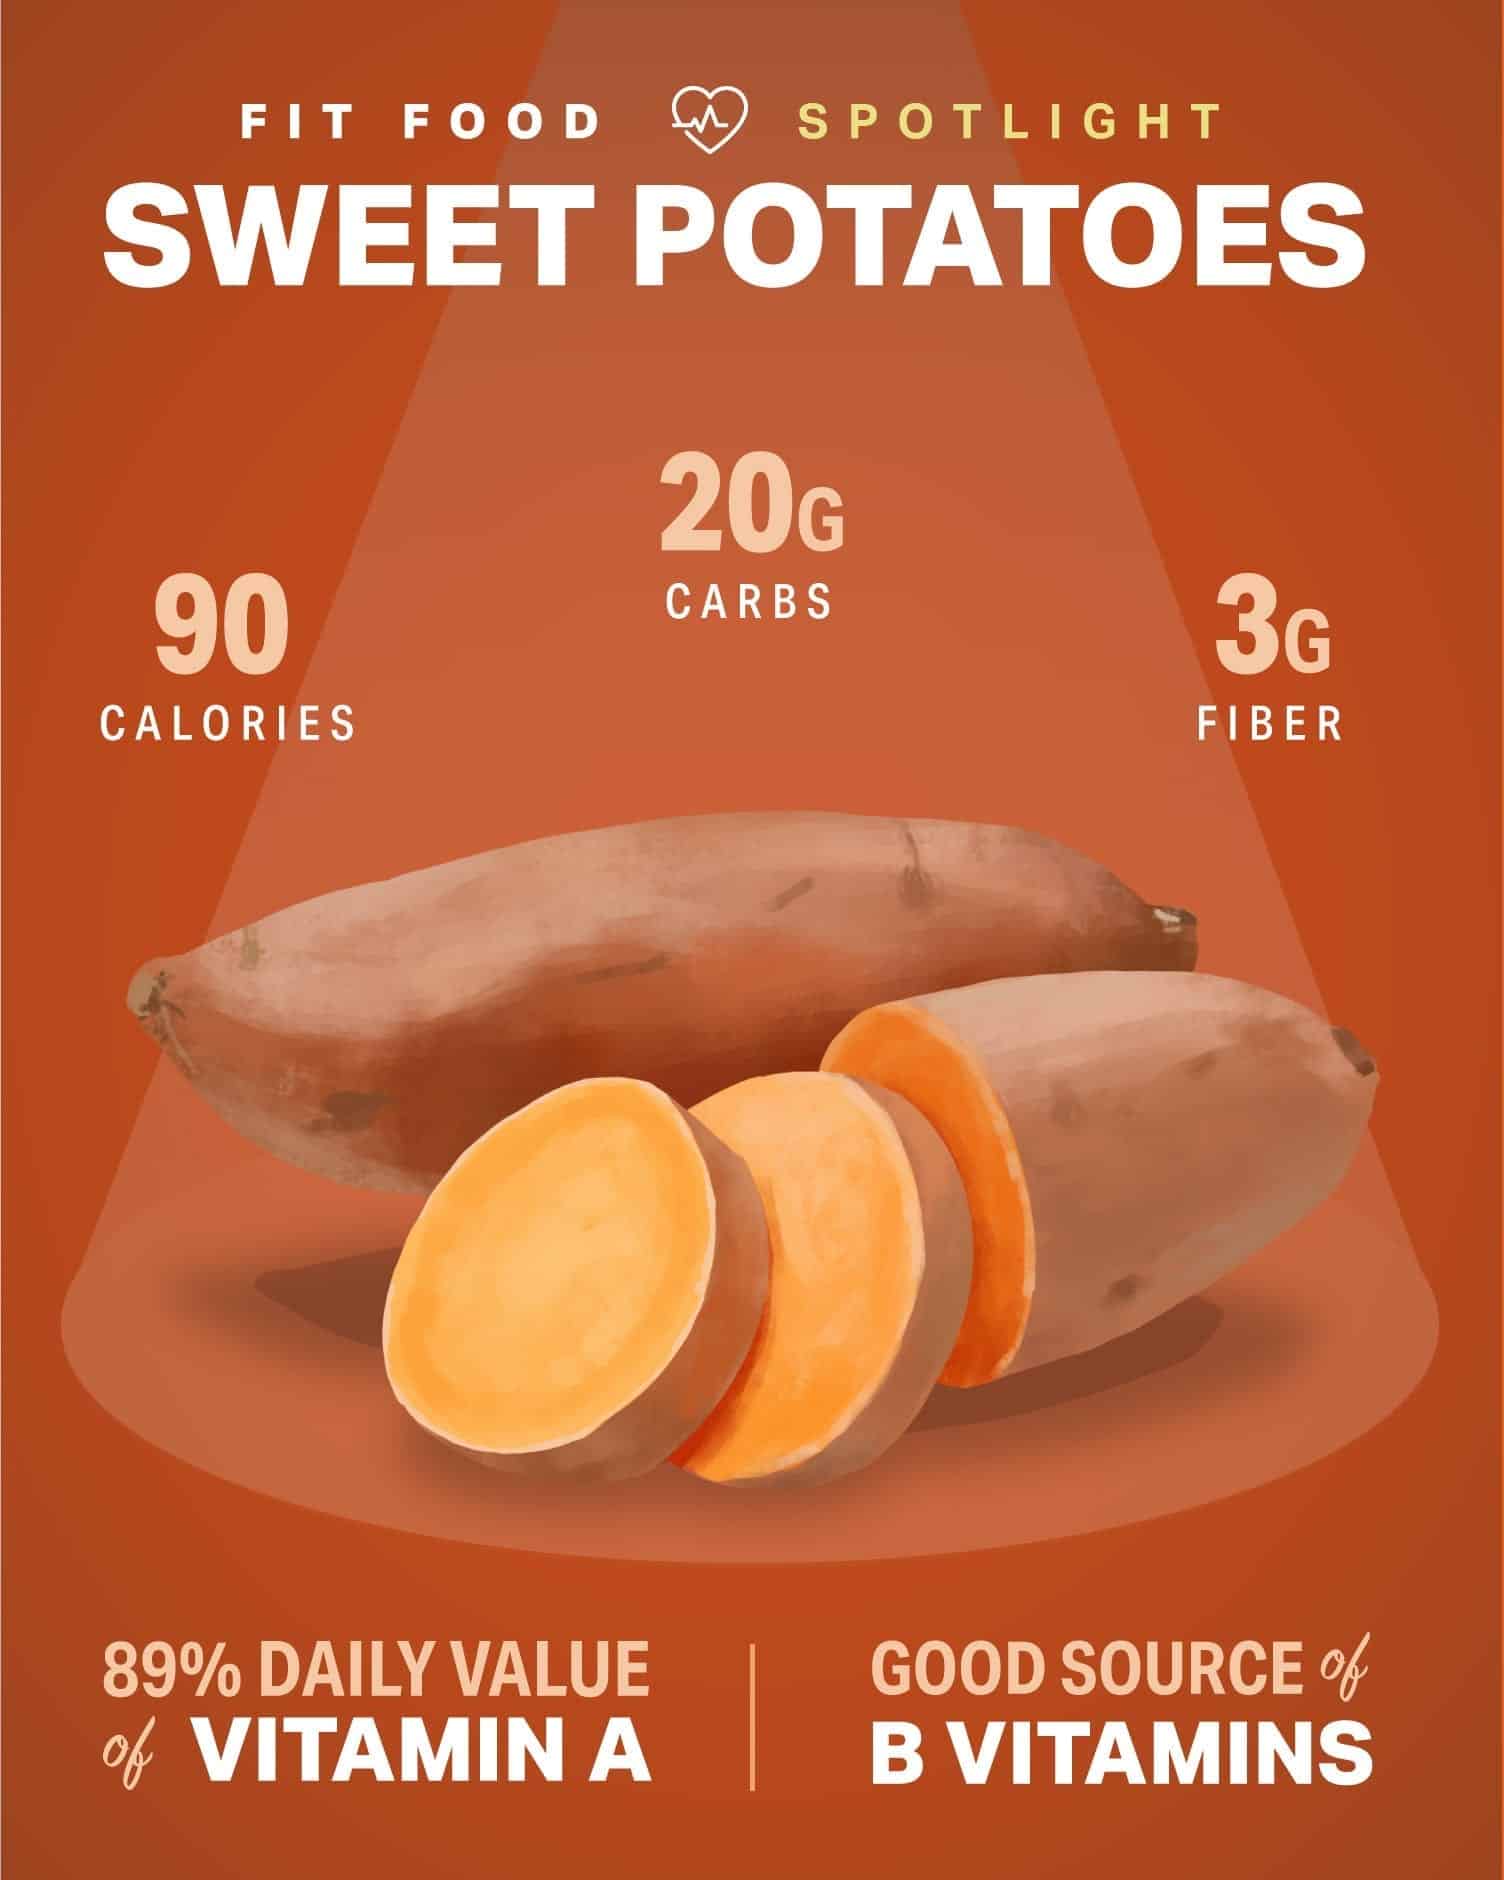 Benefits of Sweet potato